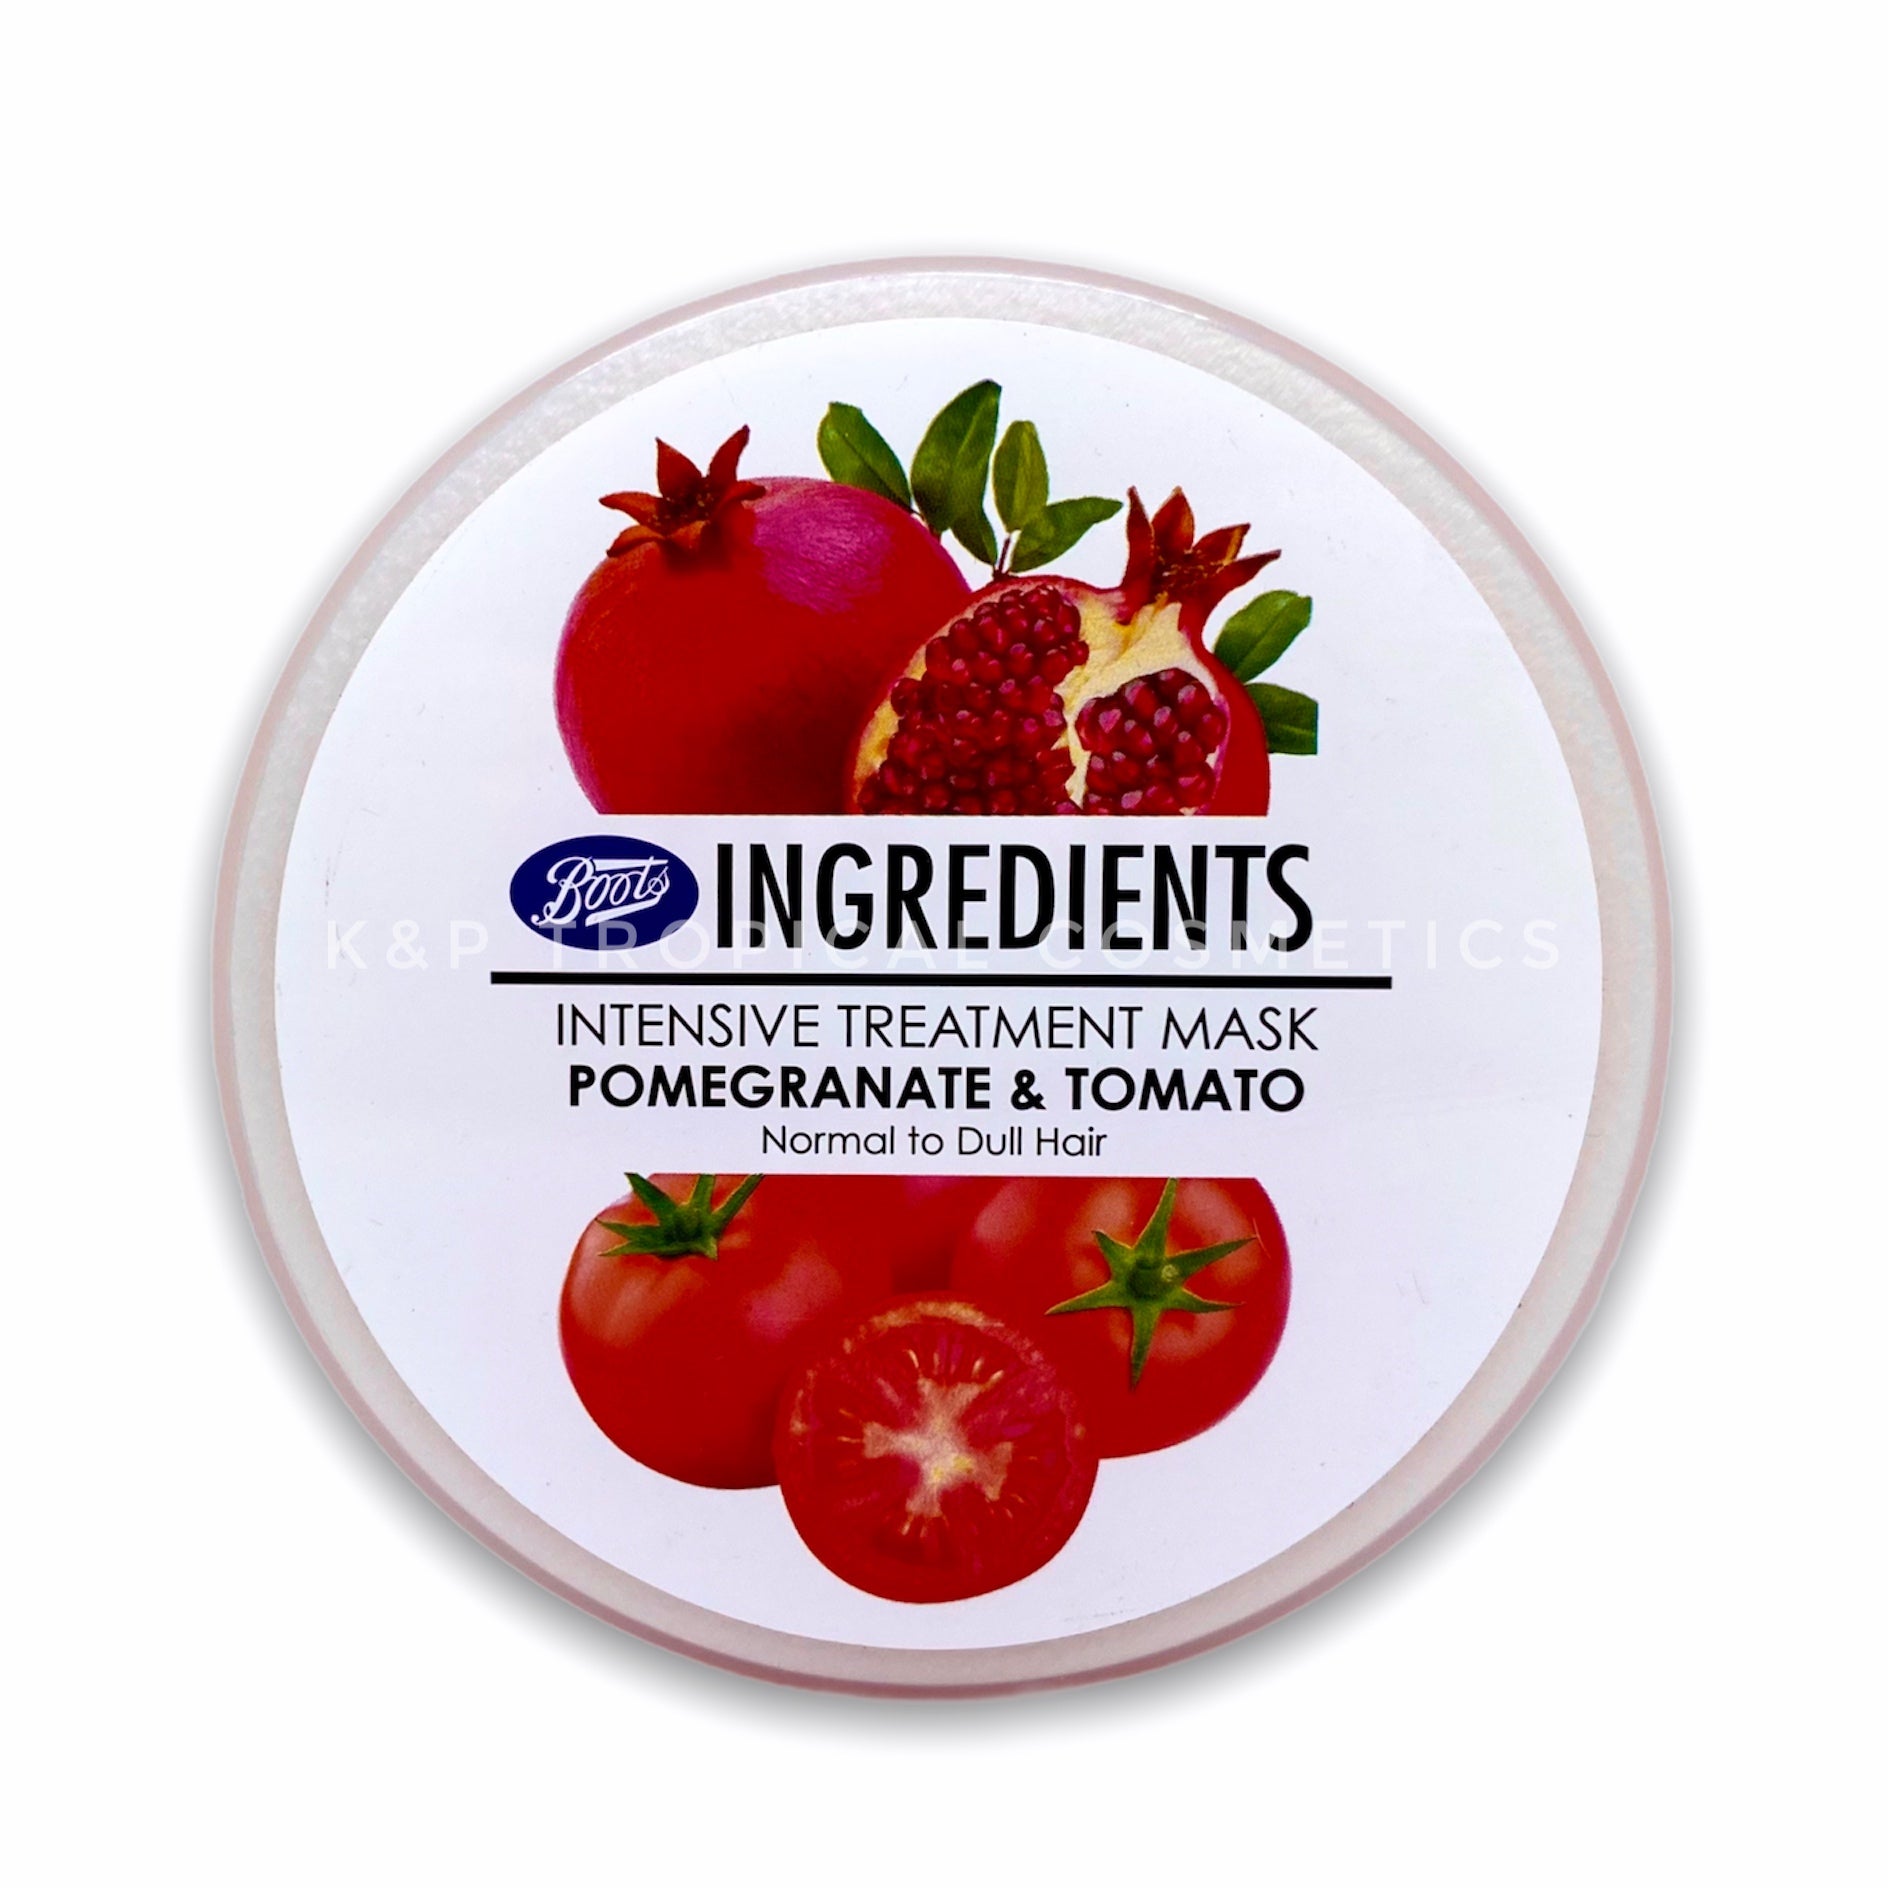 Boots Ingredients Intensive Treatment Mask Pomegranate & Tomato 400 ml., Интенсивная лечебная маска для волос с гранатом и томатом 400 мл